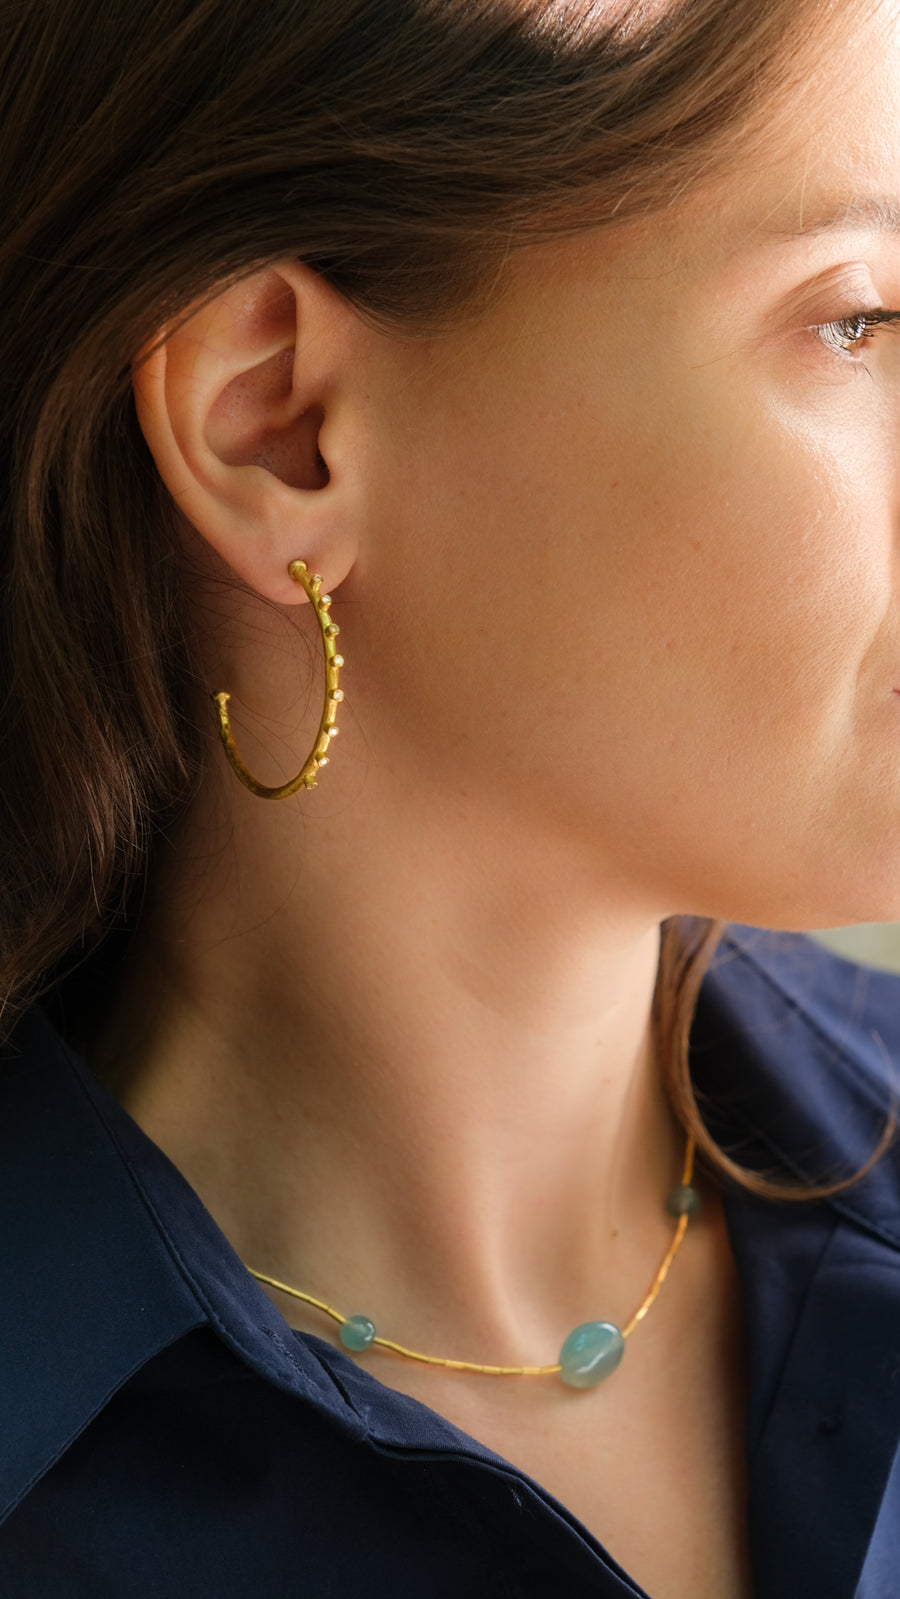 Dima Earrings in 24K Yellow Gold and Diamonds - Medium